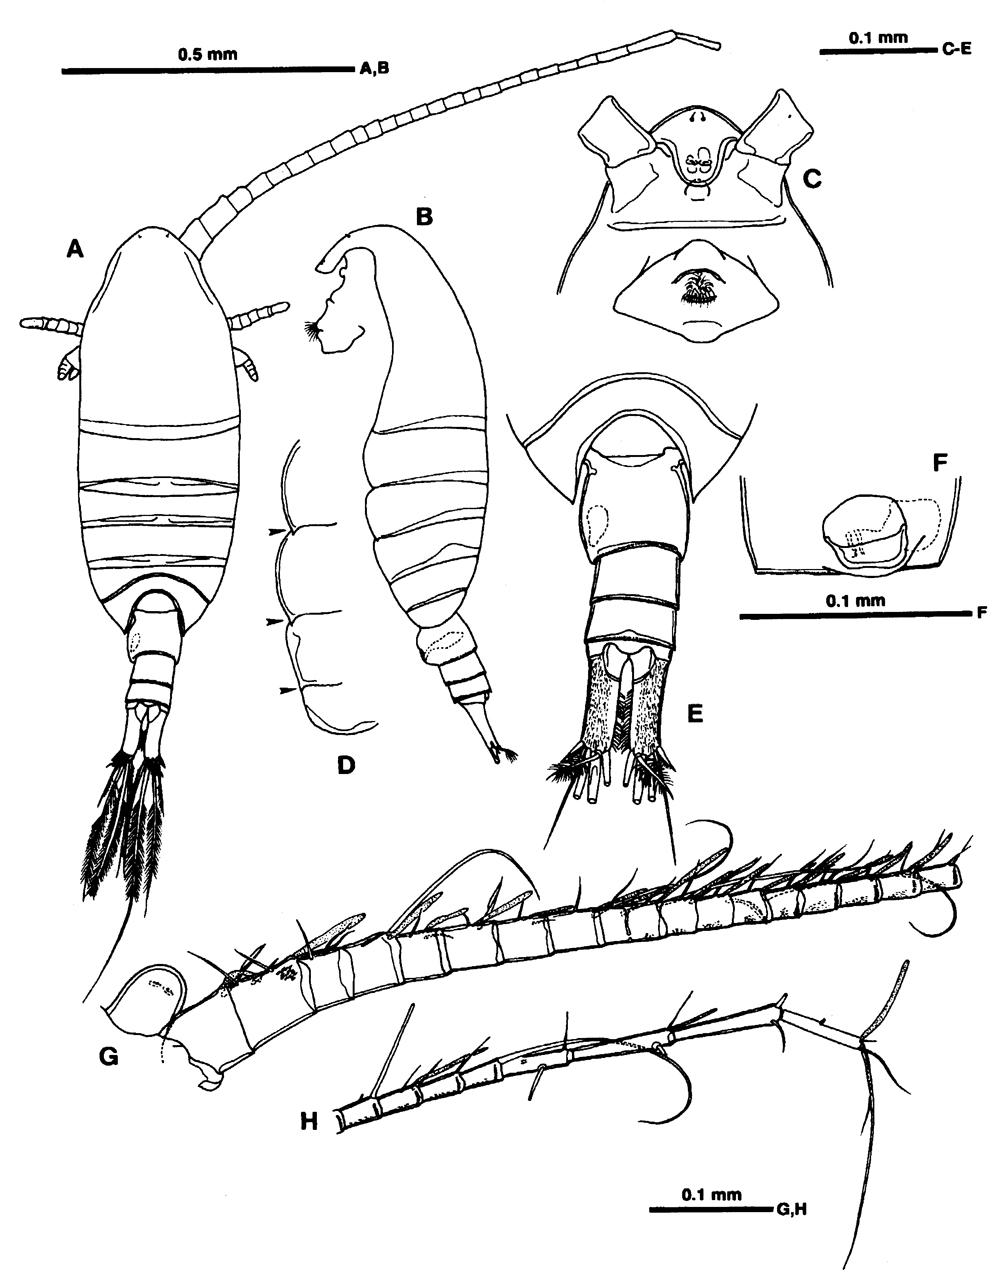 Species Ridgewayia stygia - Plate 1 of morphological figures